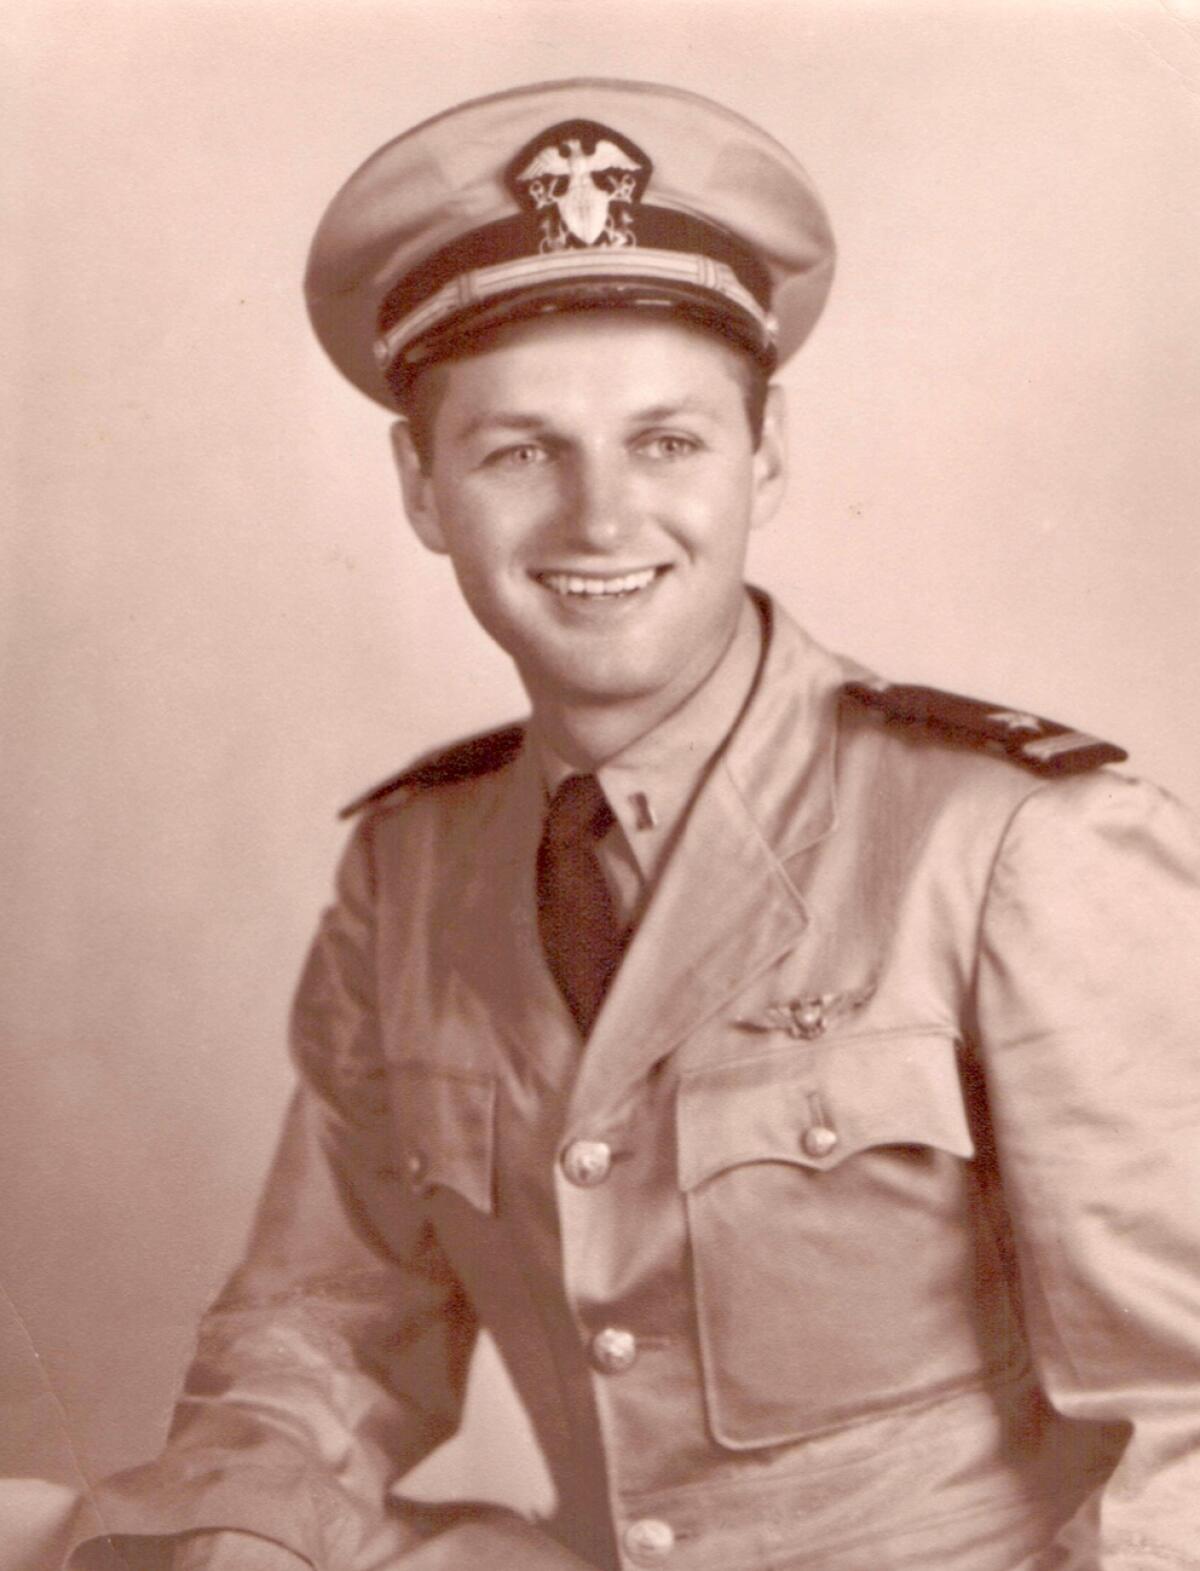 Navy pilot Leo White in 1943